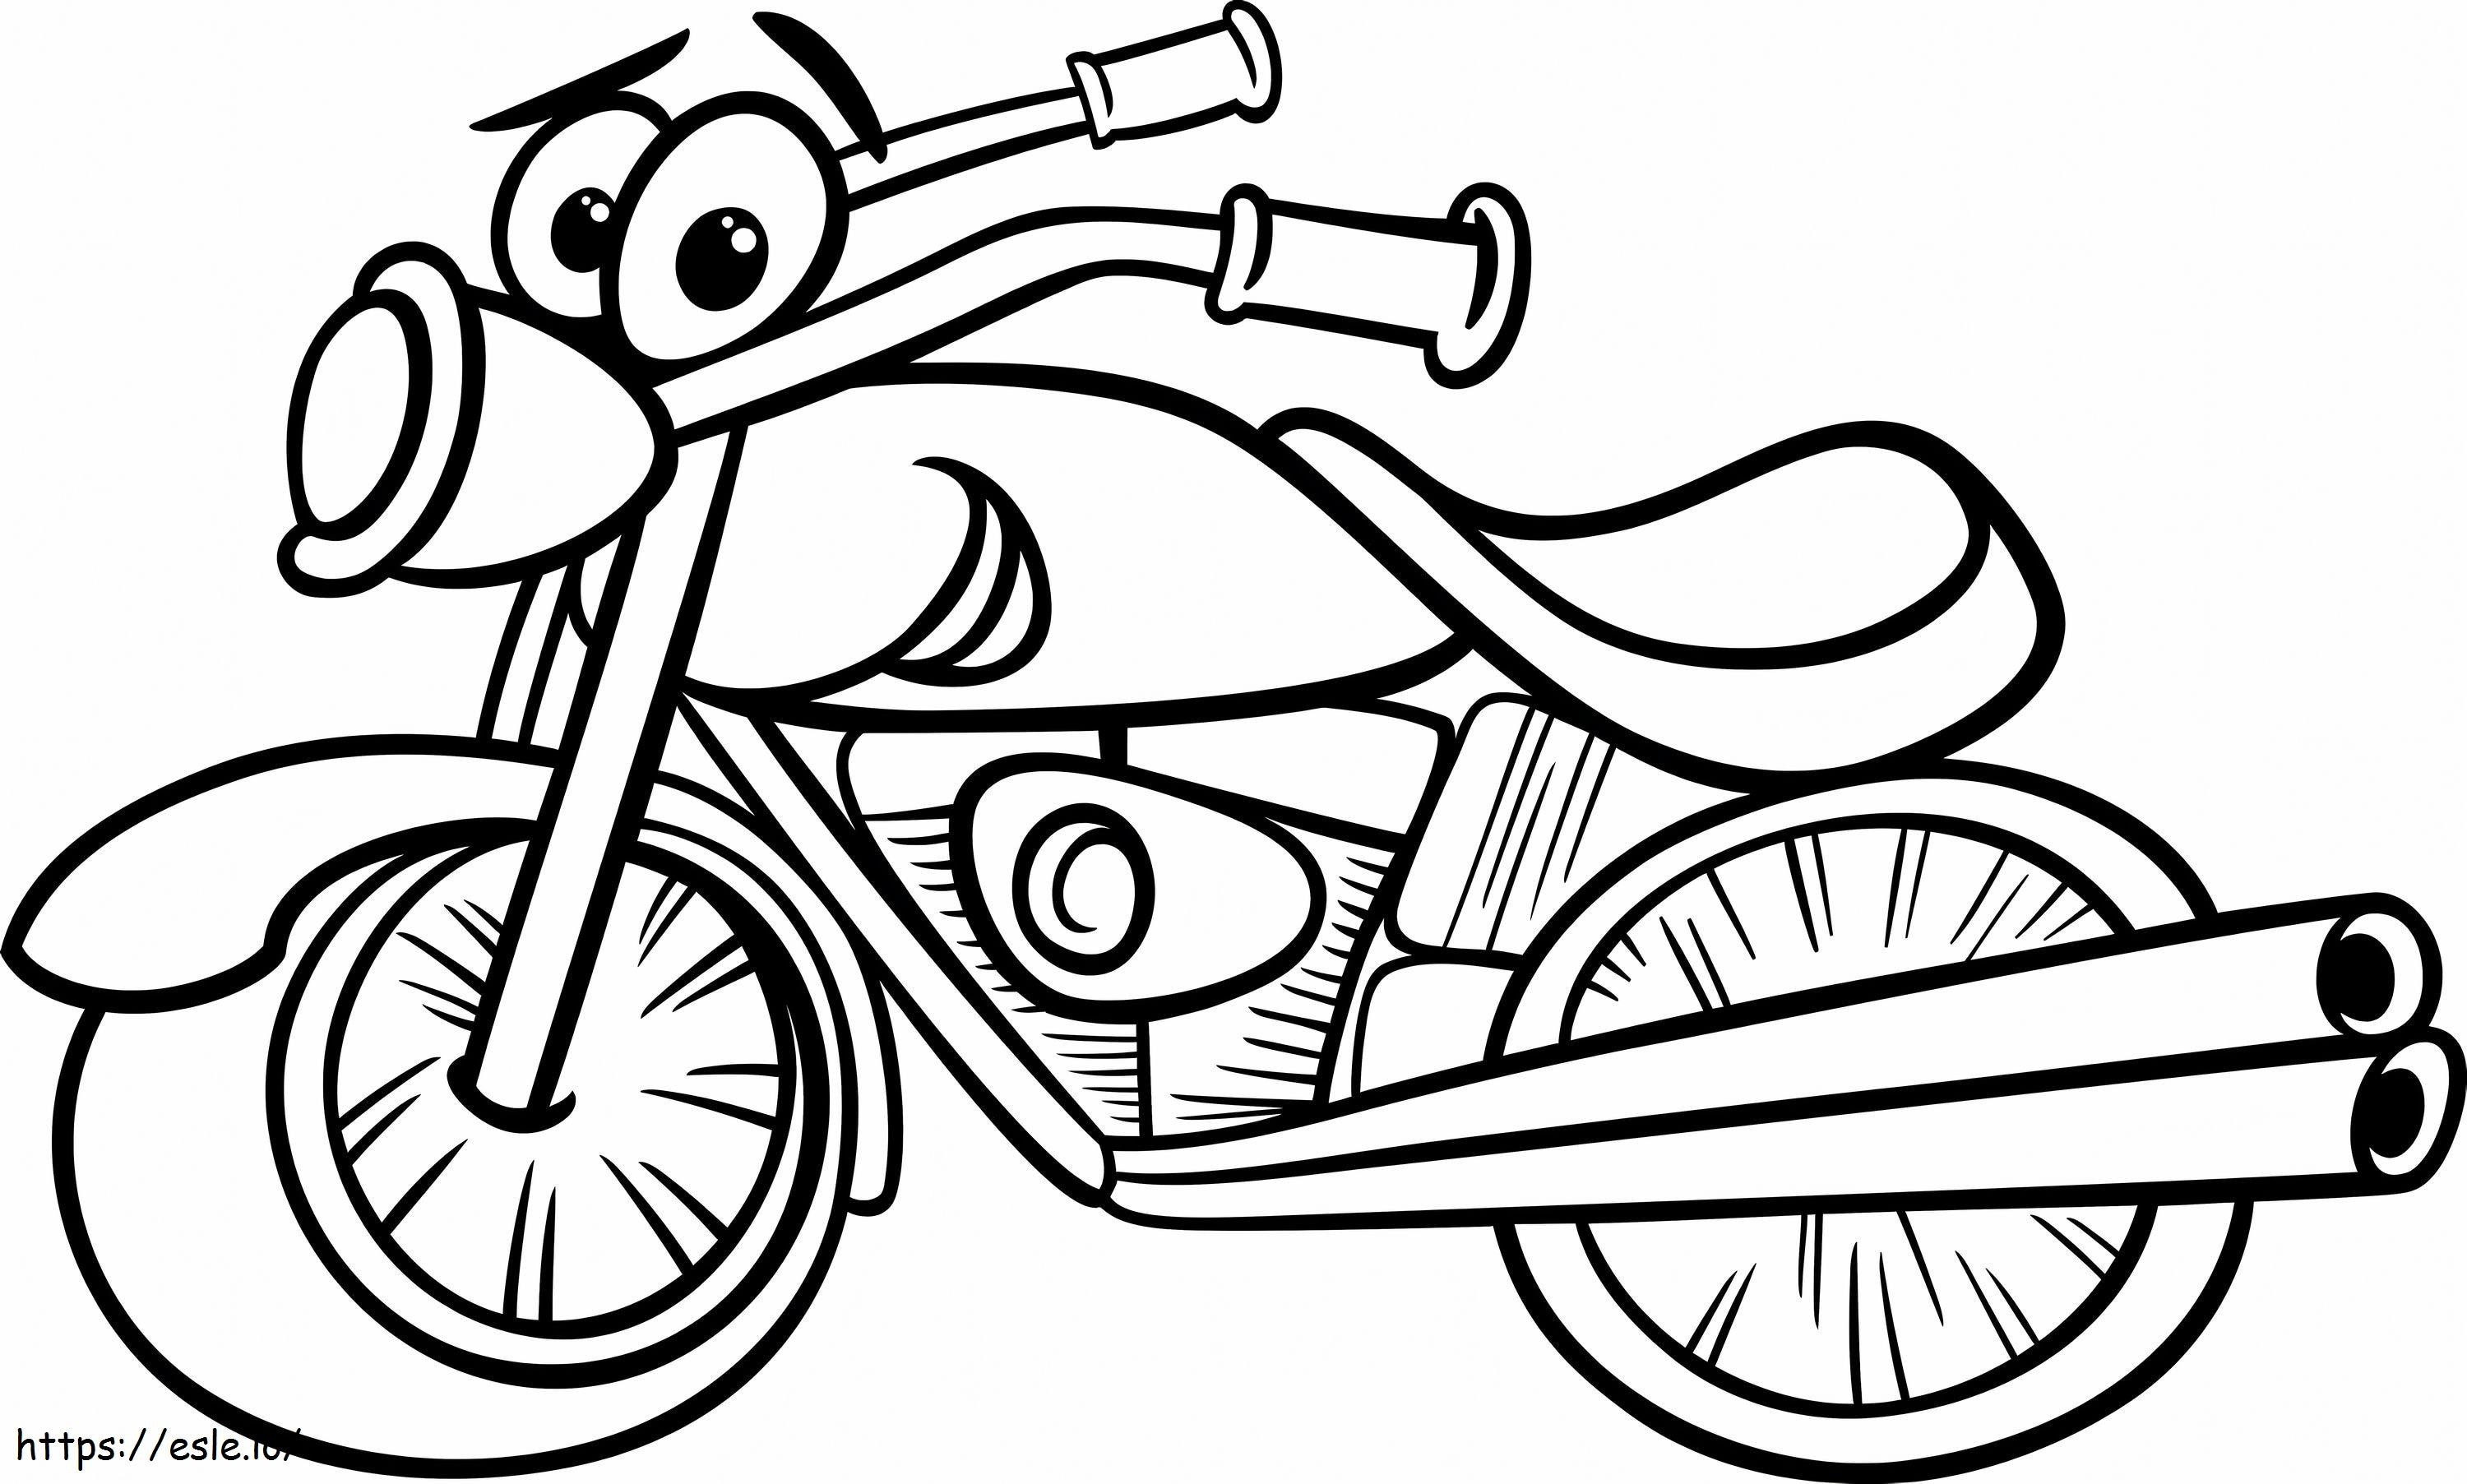 Coloriage Moto de dessin animé à imprimer dessin